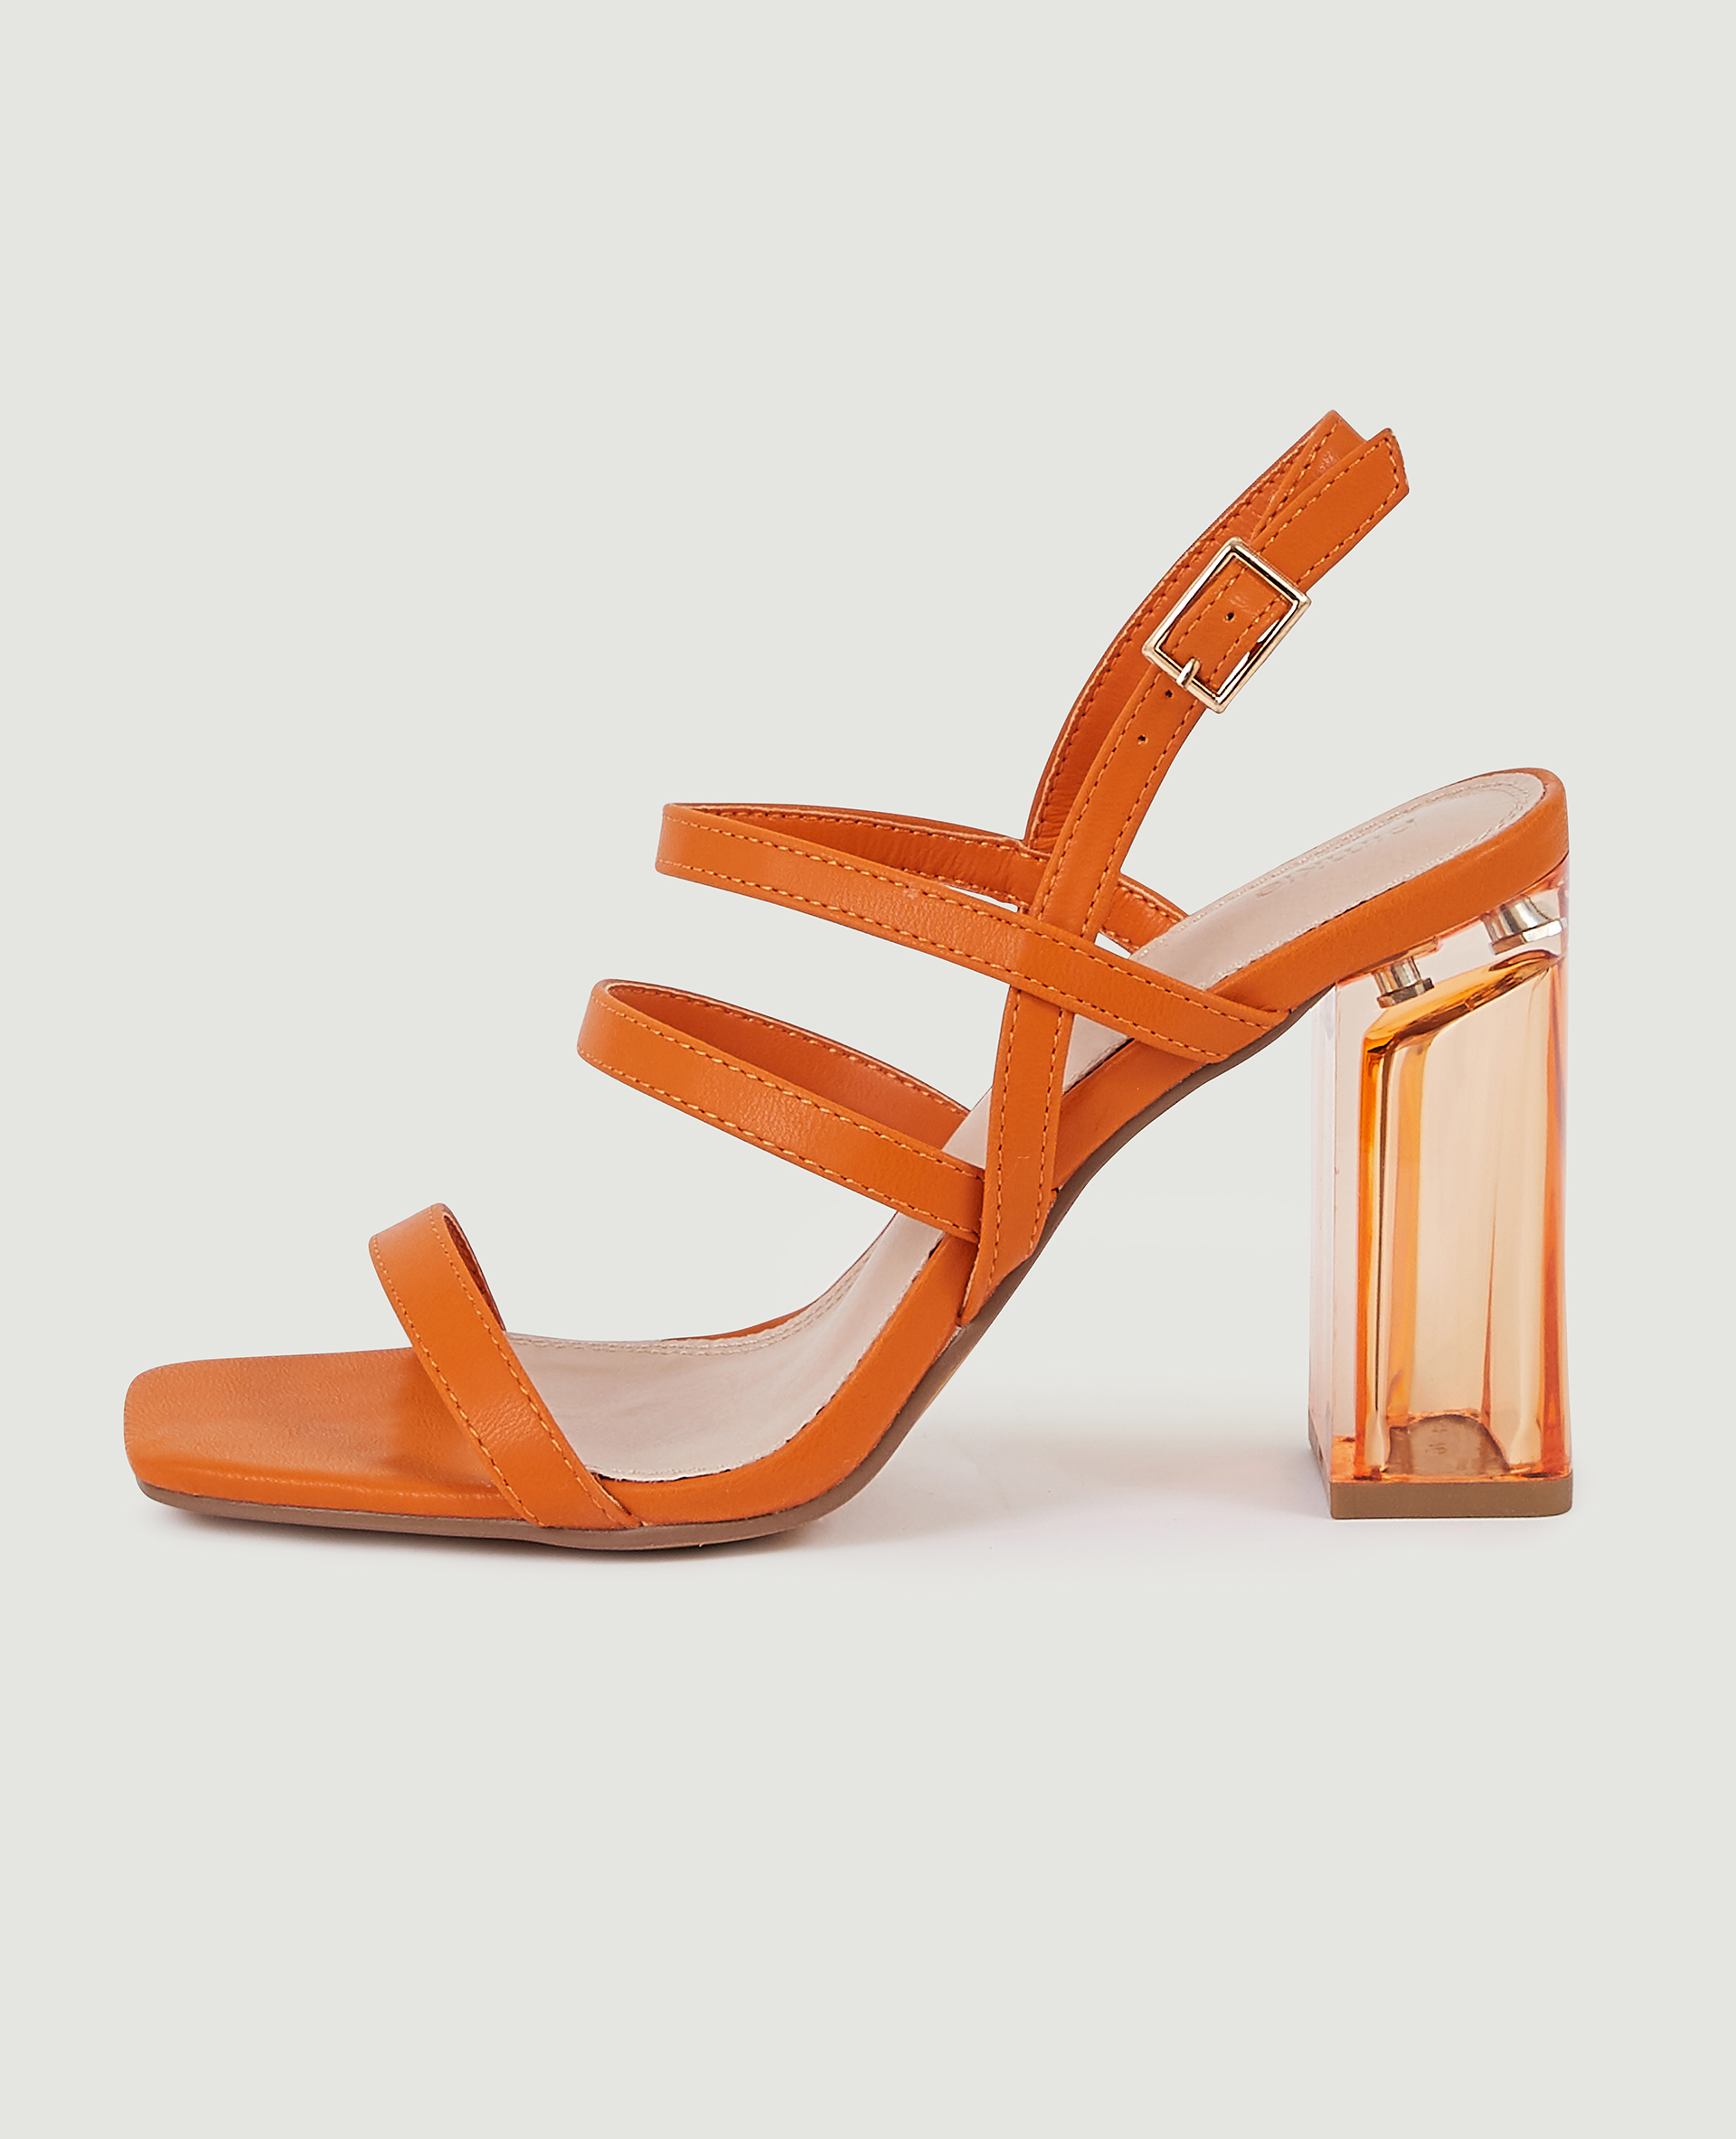 Sandales talon plexi orange - Pimkie